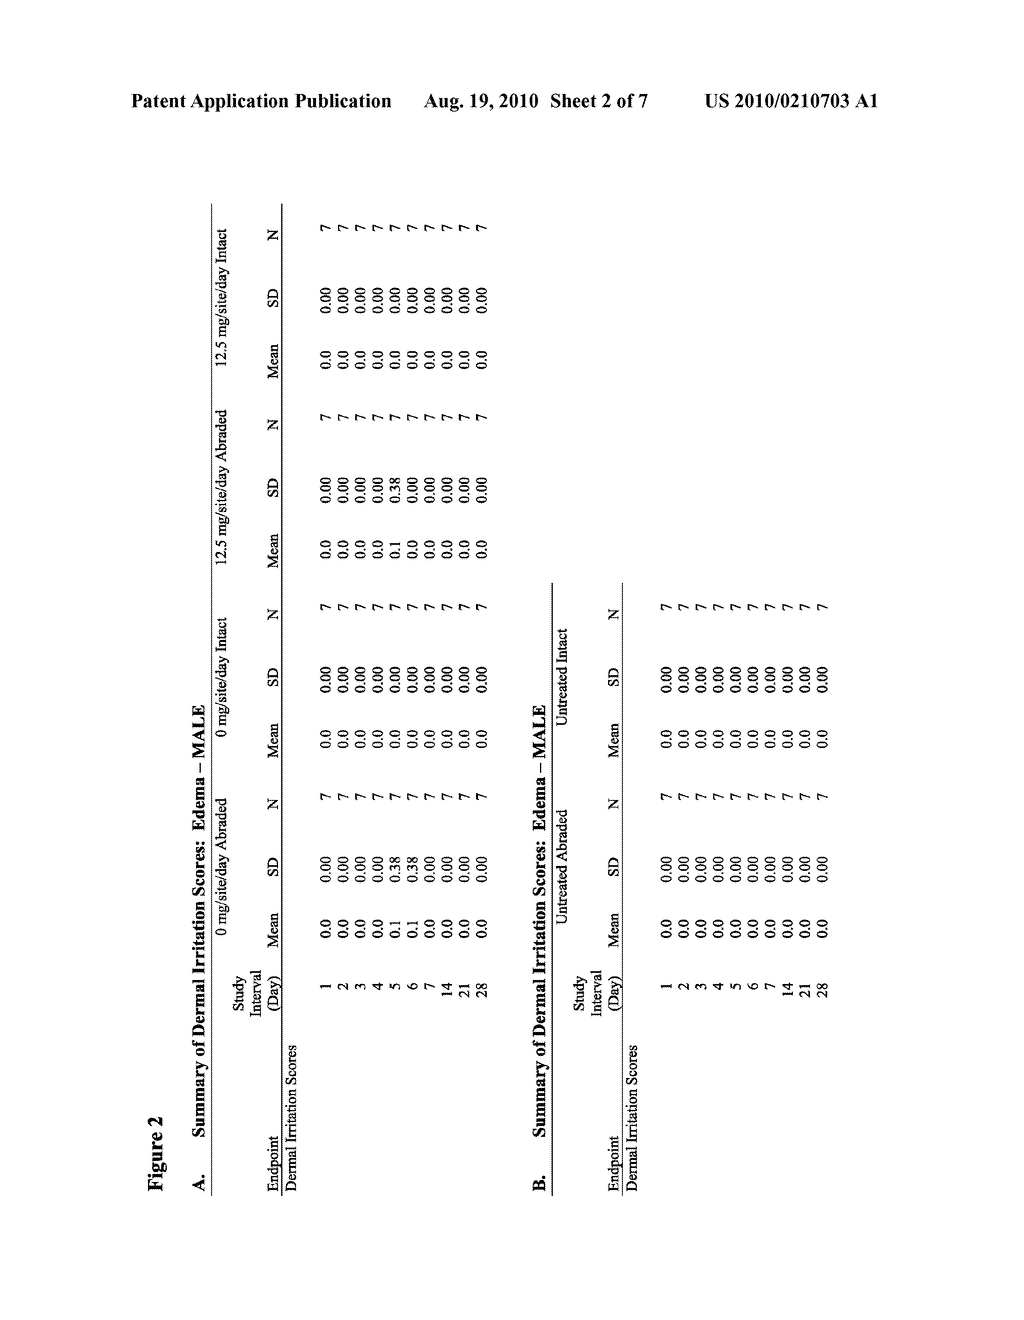 ANTI-FUNGAL FORMULATION - diagram, schematic, and image 03